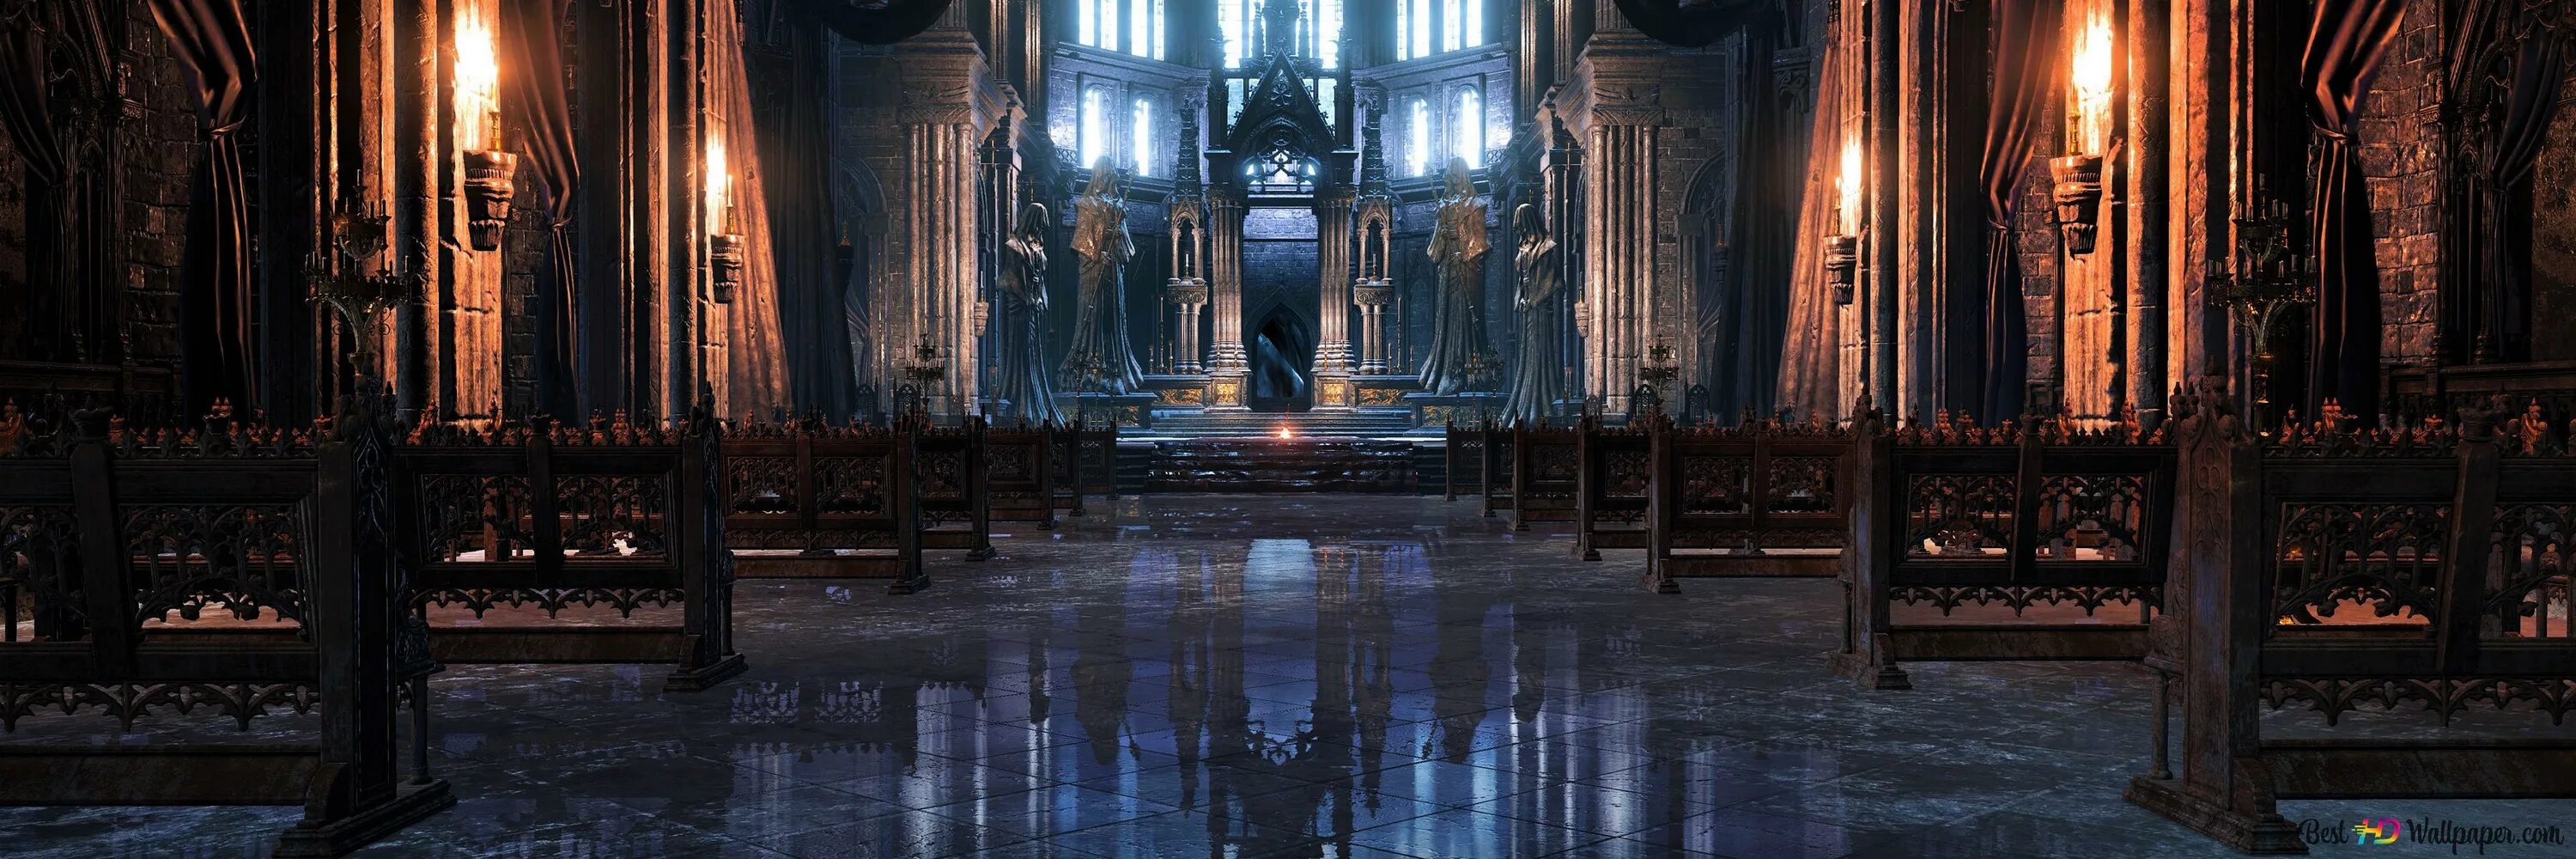 Final Fantasy XV Тронный зал. Дворец фэнтези. Храм. Готический стиль.